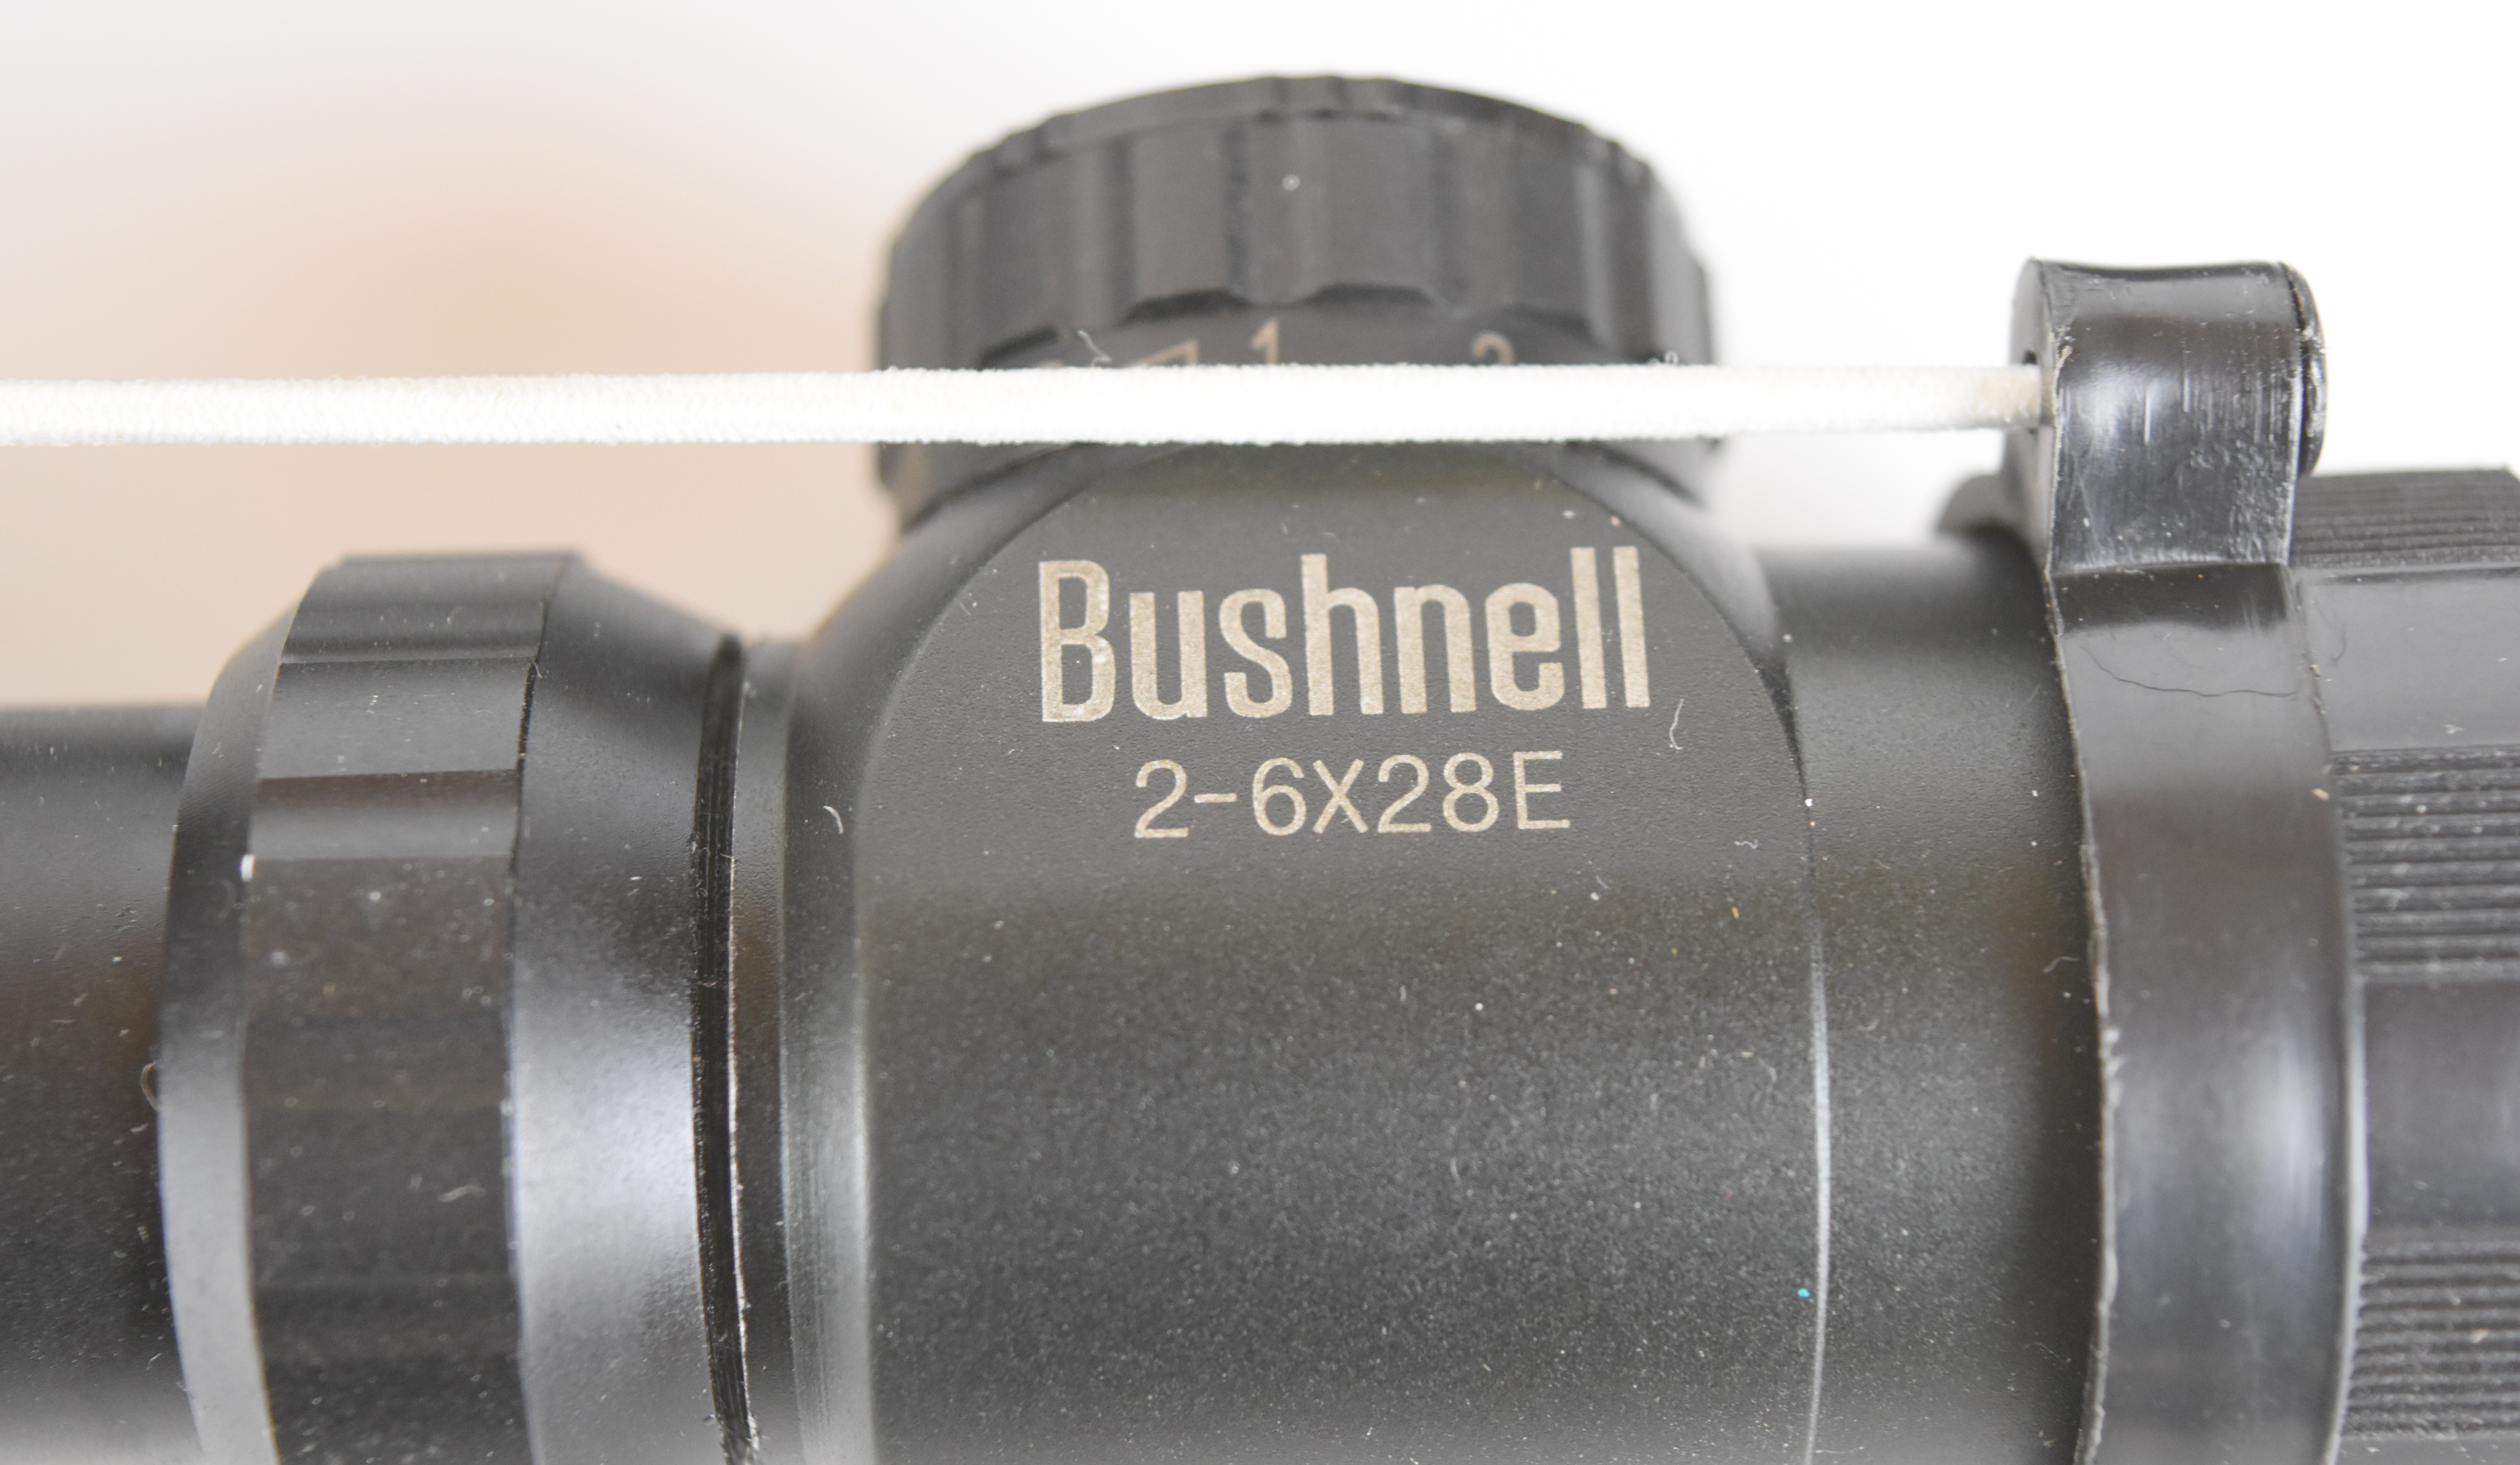 Three Bushnell rifle scopes Scopechief IV 3x-9x, 3-9x42E and 2-6x28E. - Image 4 of 4